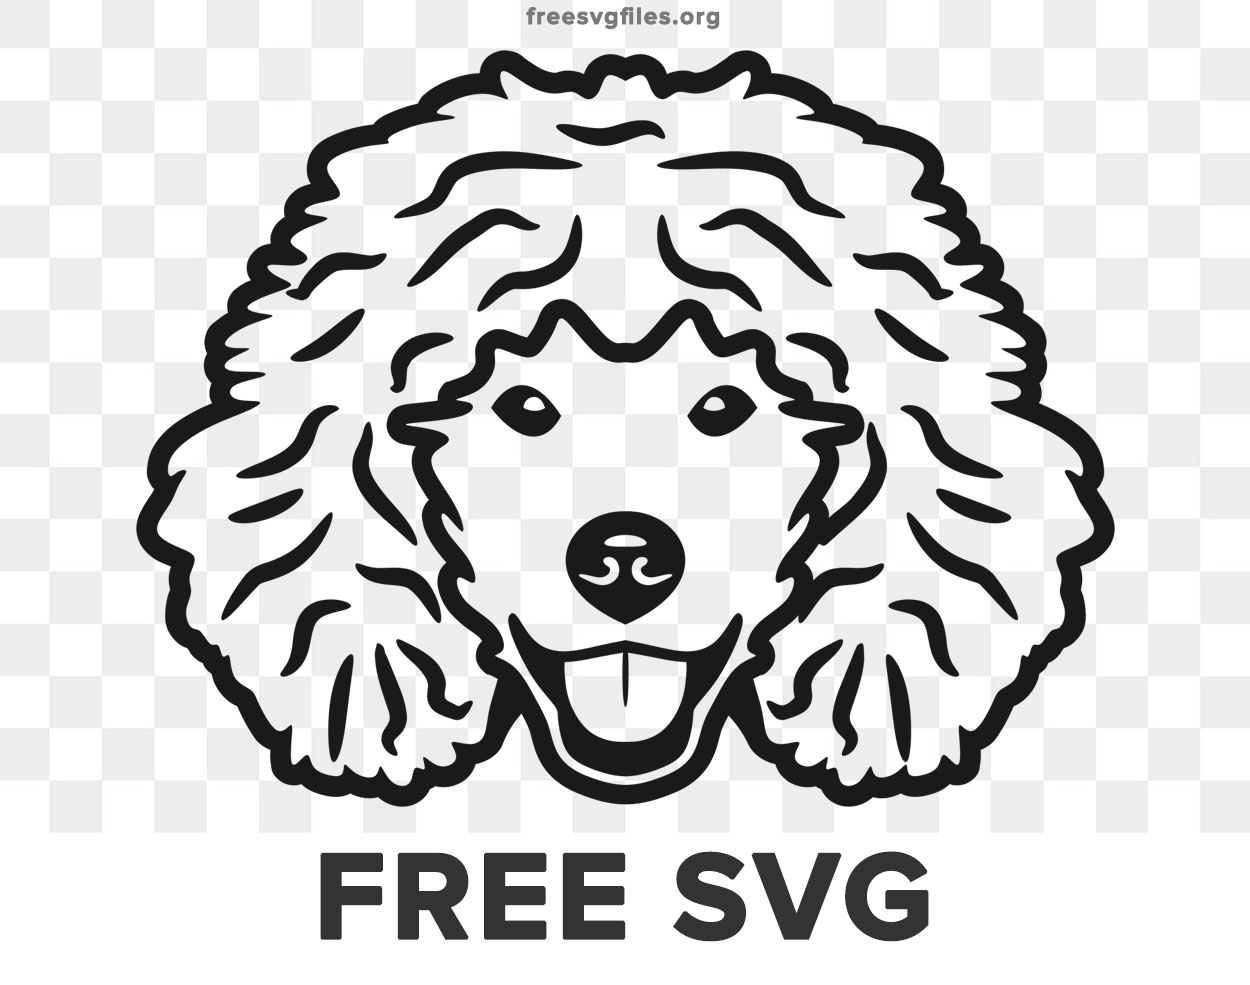 Free Dog SVG - Free SVG Cut Files 🐶